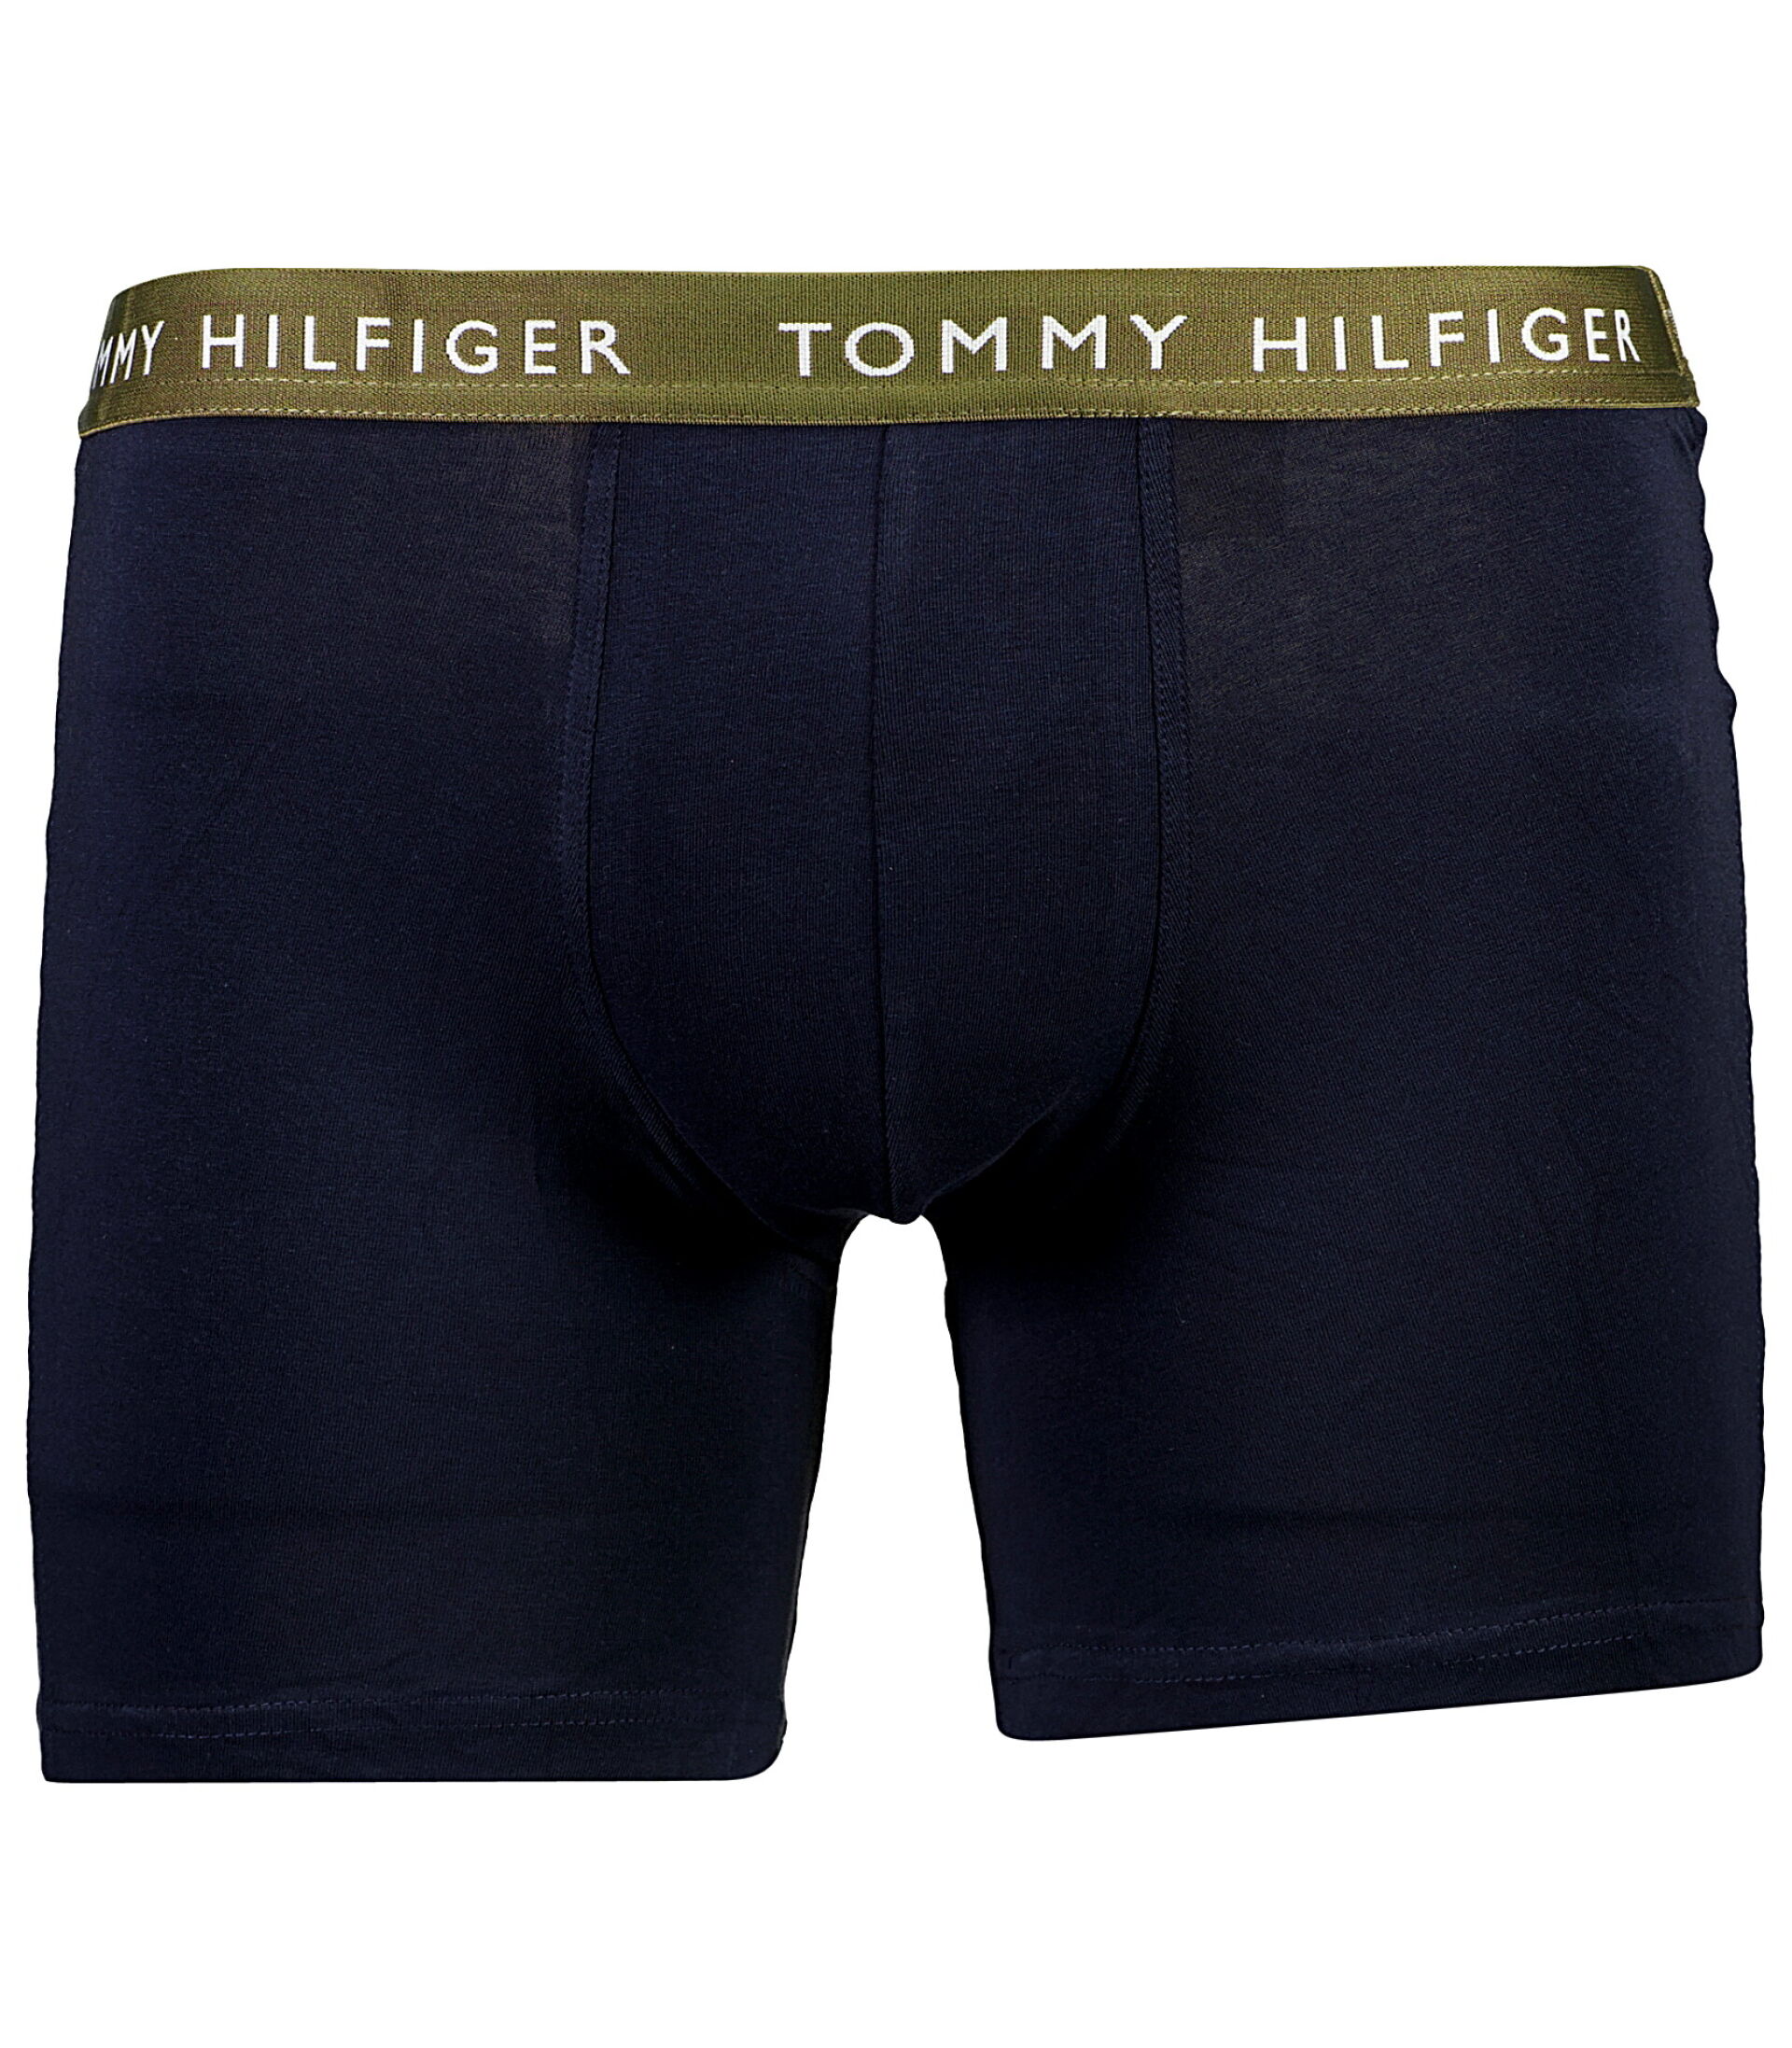 Tommy Hilfiger  Tights 90-900794